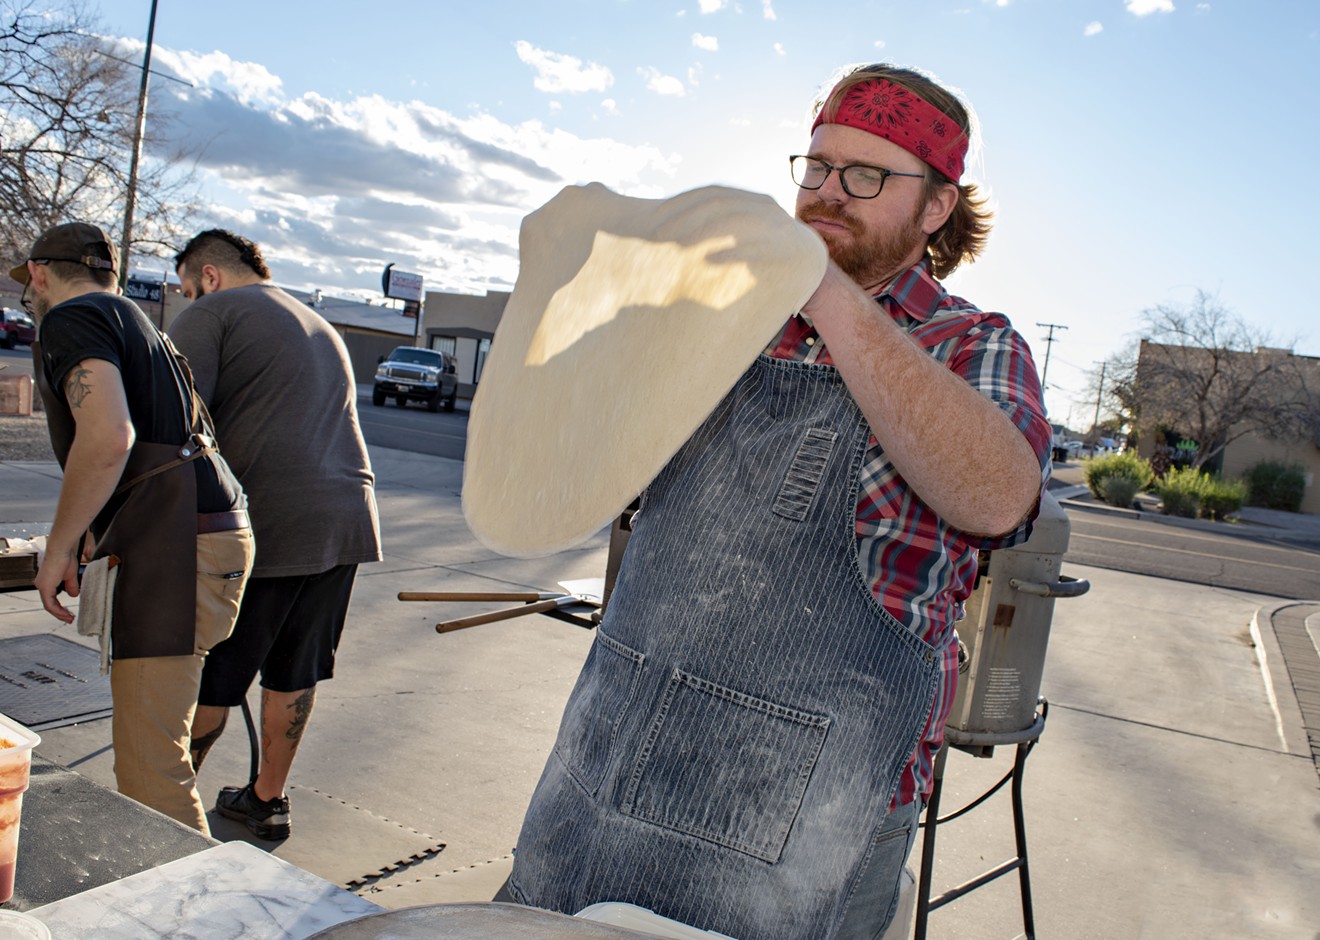 Myke Olsen shapes pizza dough at his pop-up restaurant in Mesa.